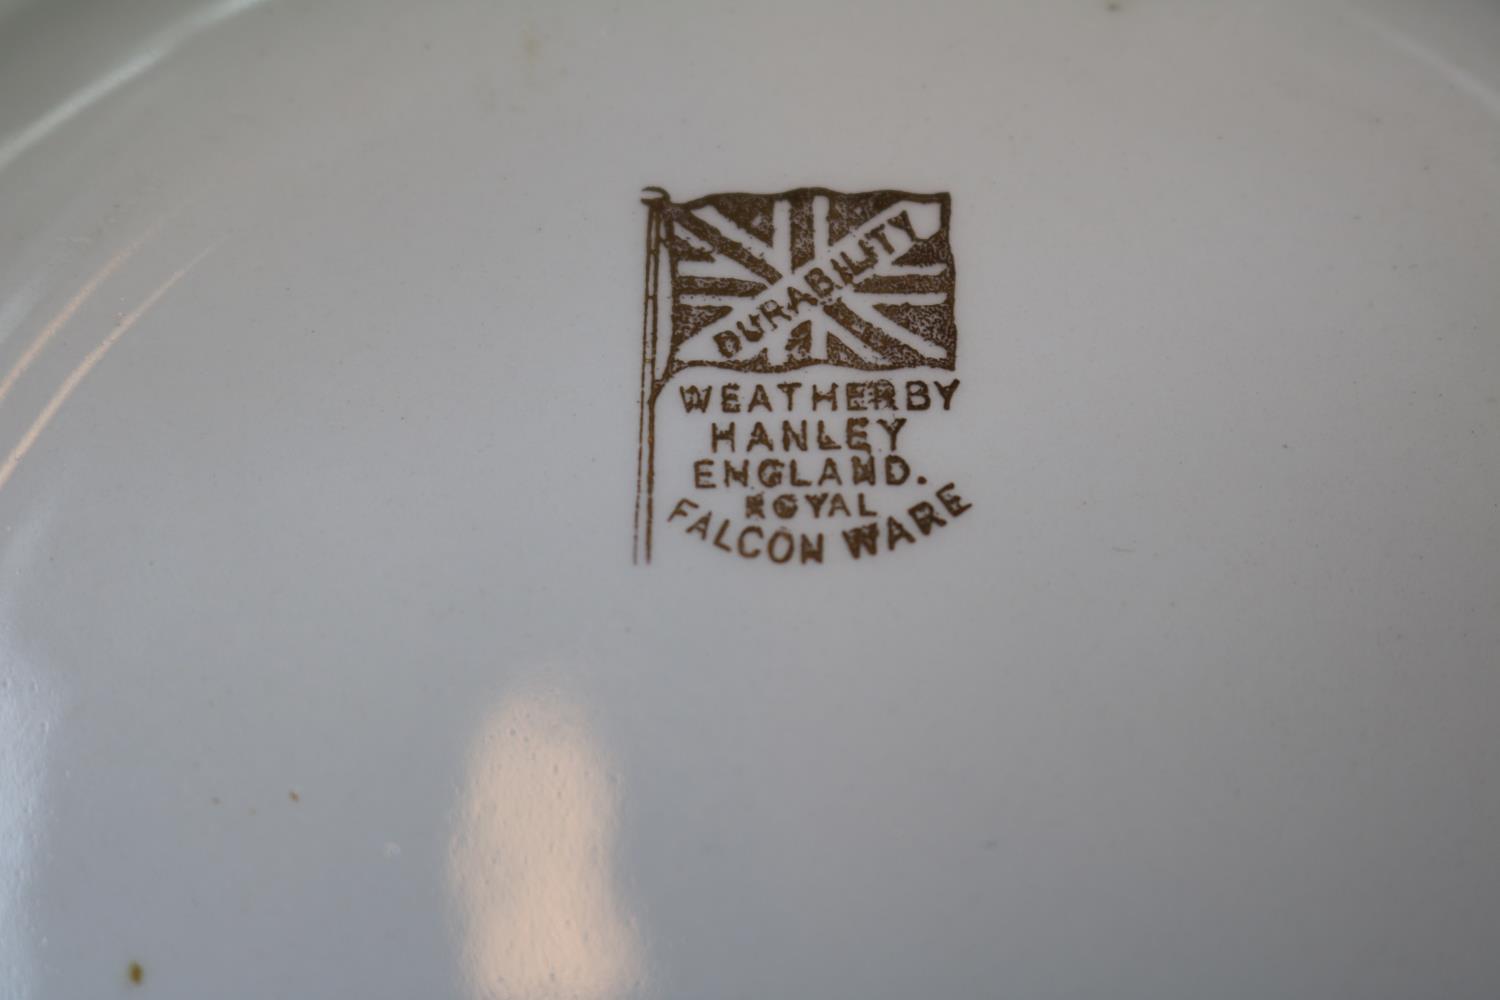 Local interest. White Hart Pub, St Ives, Cambridgeshire (Huntingdonshire) Falcon ware plate. - Image 2 of 2